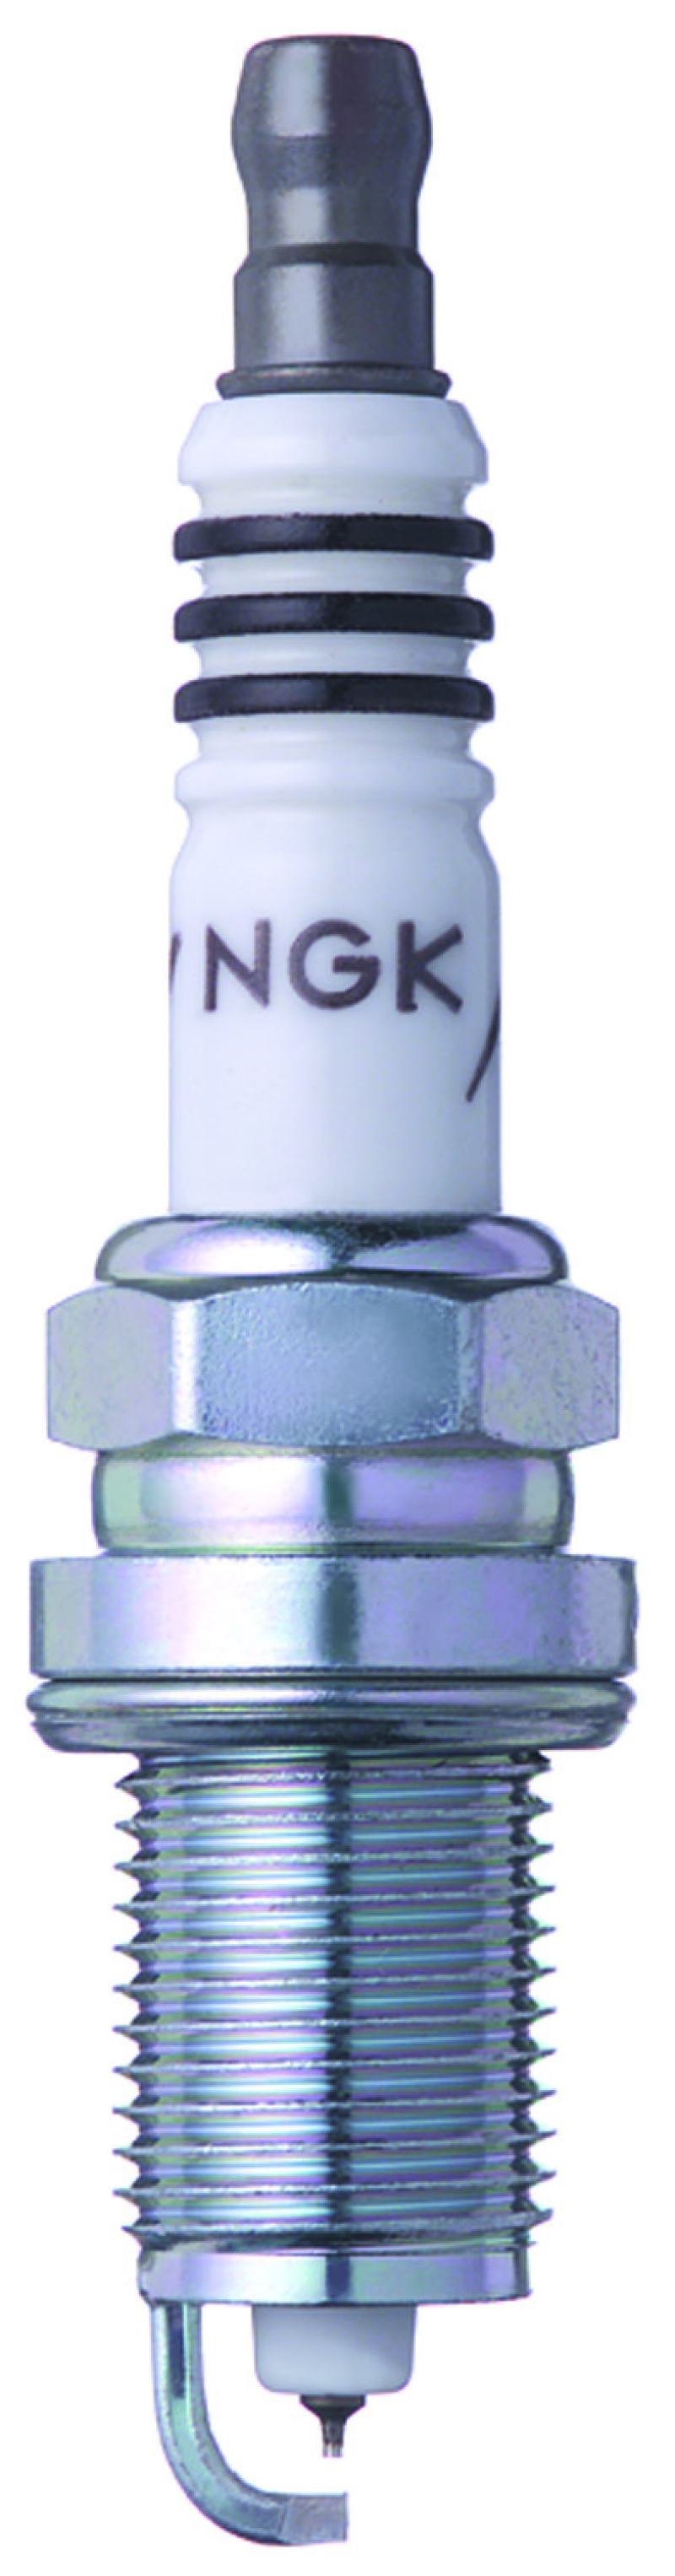 NGK Laser Iridium Spark Plug Box of 4 (IZFR5J) - 5899